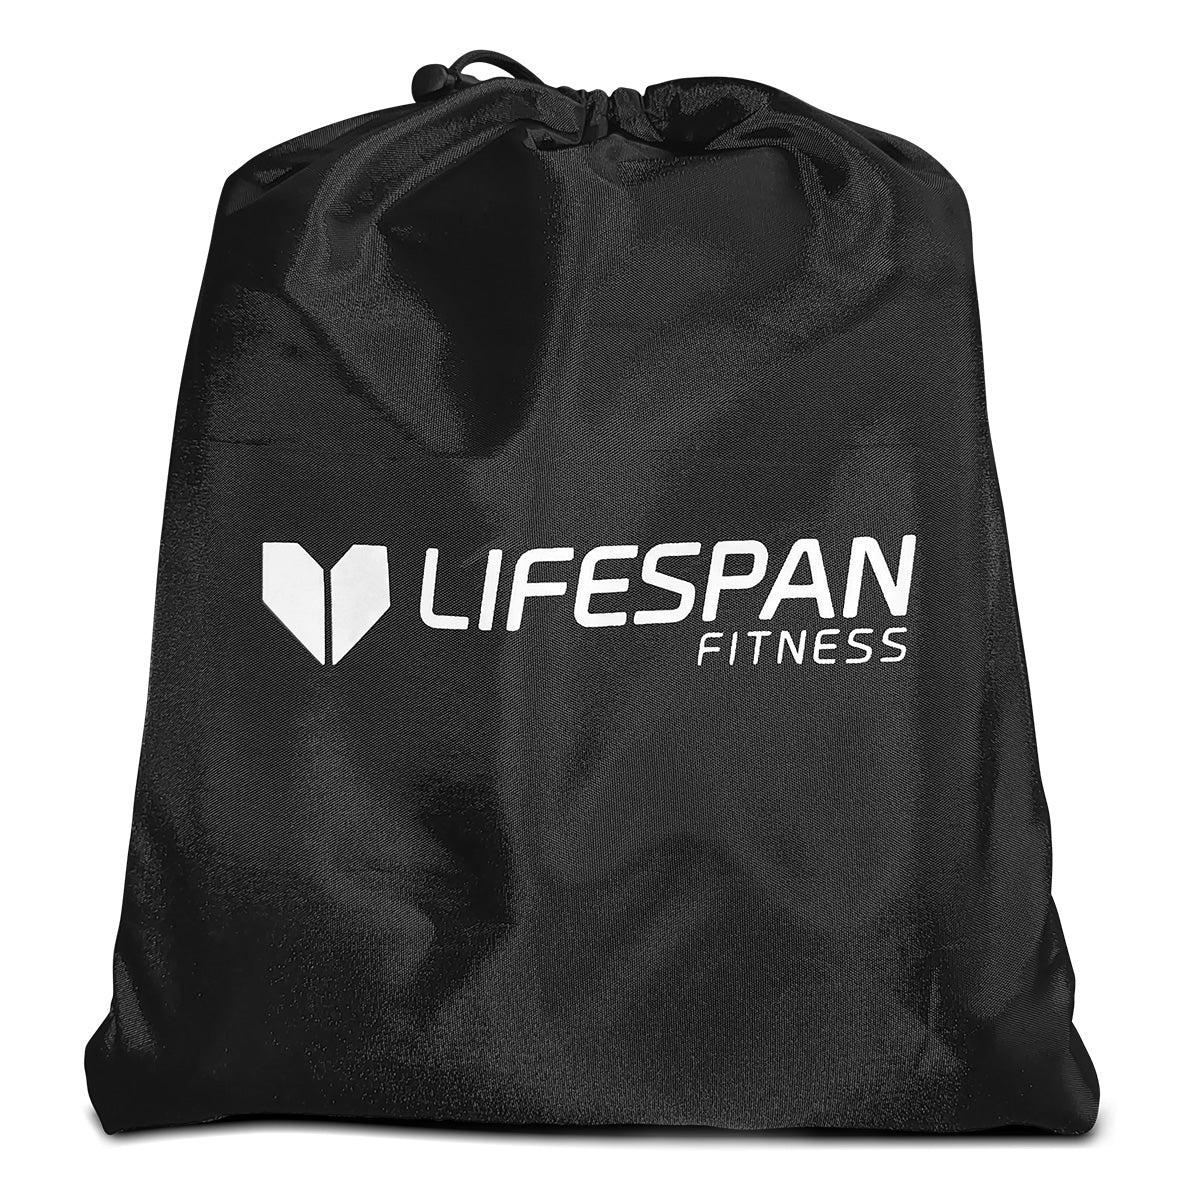 Lifespan Cross Trainer Cover